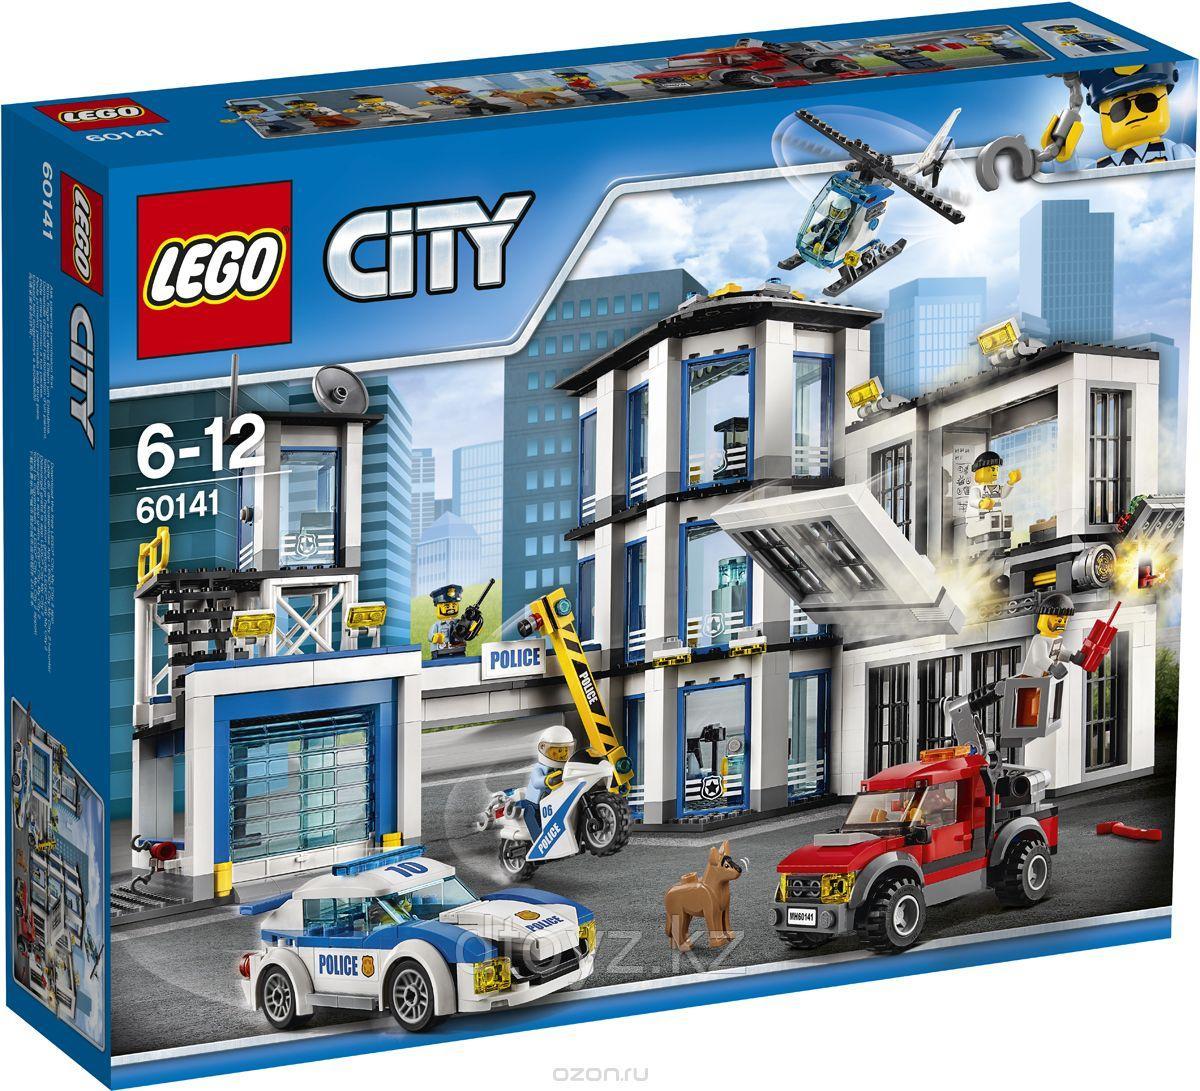 Lego City 60141 - Полицейский участок Лего Сити